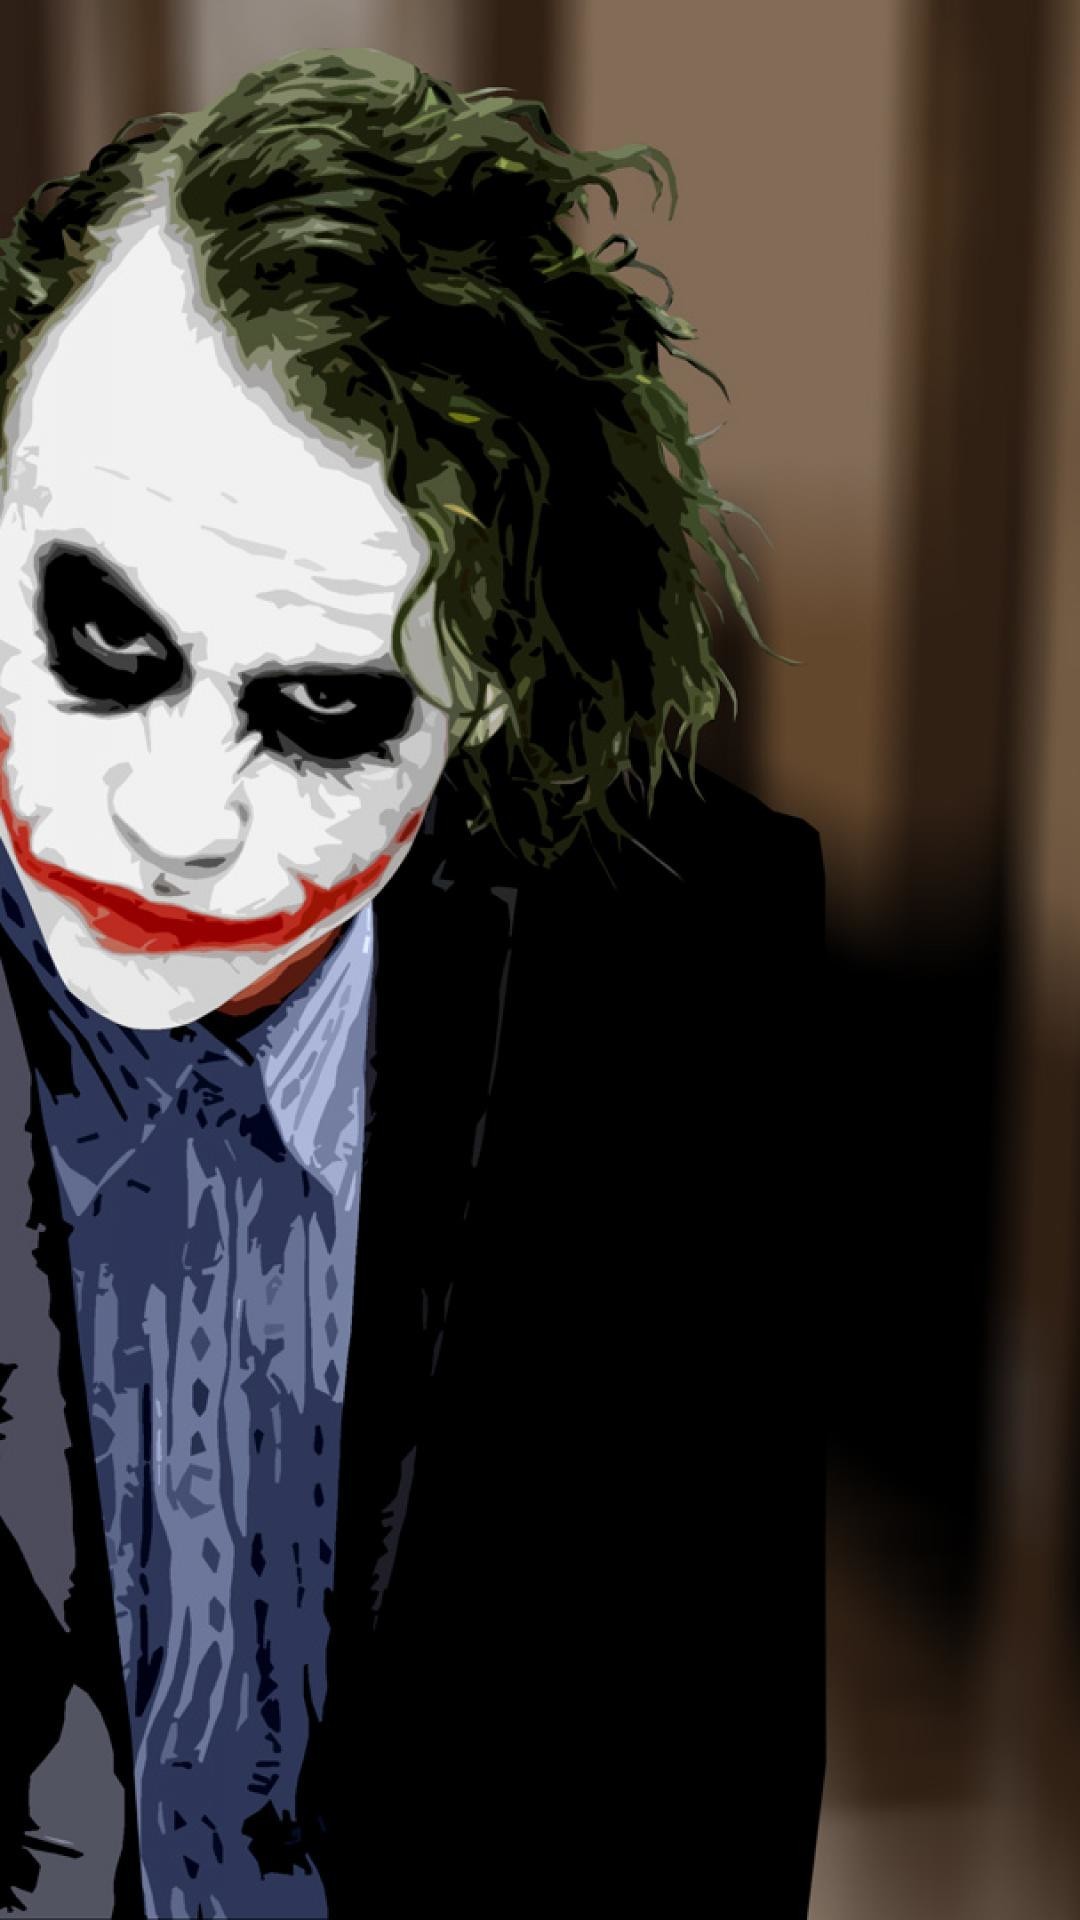 Heath Ledger Joker HD Grunge Wallpaper by xPancakes4lyf on DeviantArt